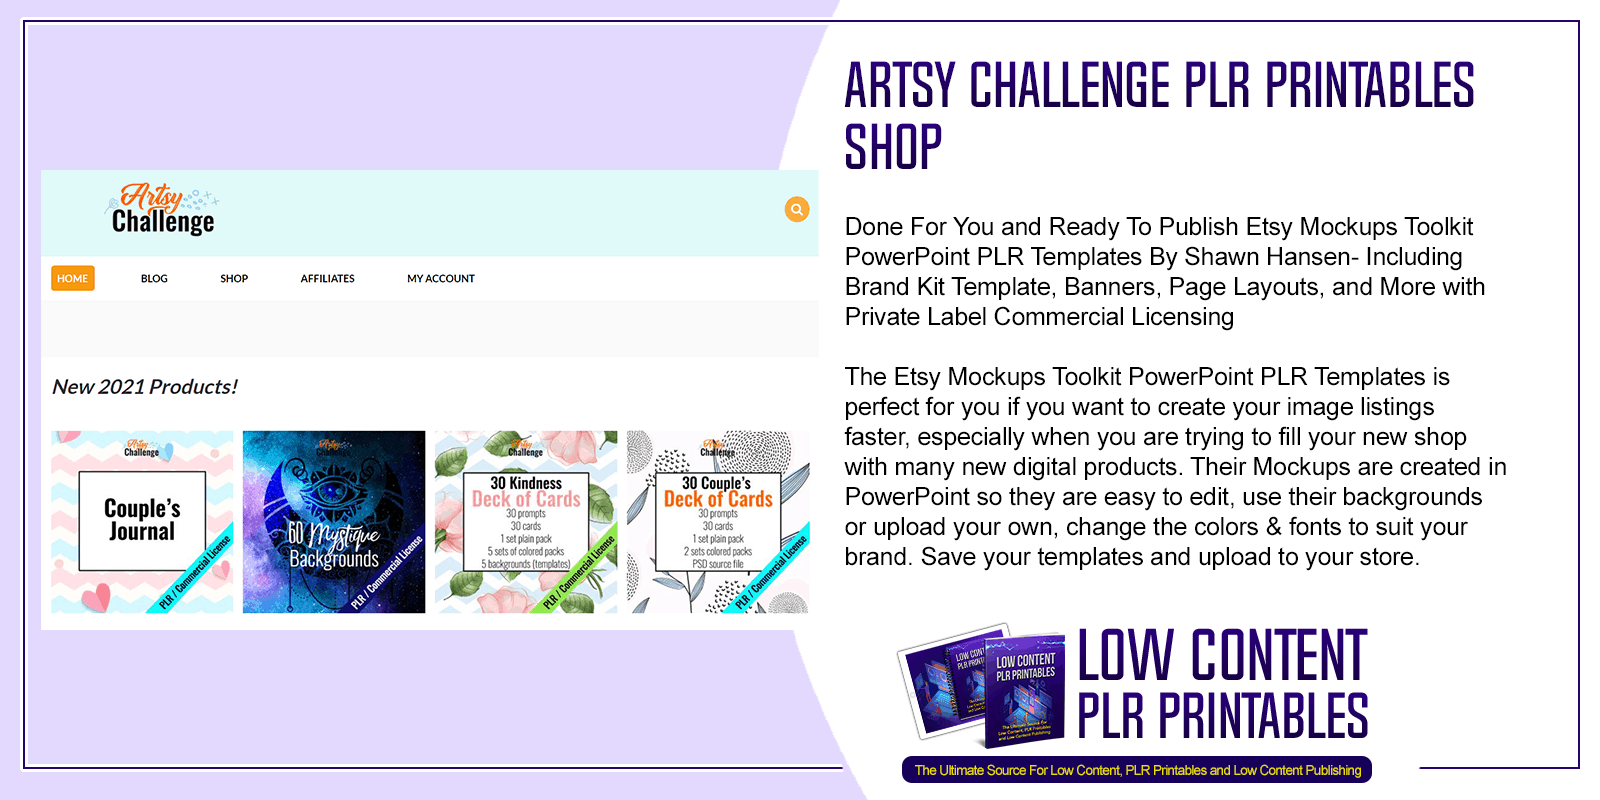 Artsy Challenge PLR Printables Shop